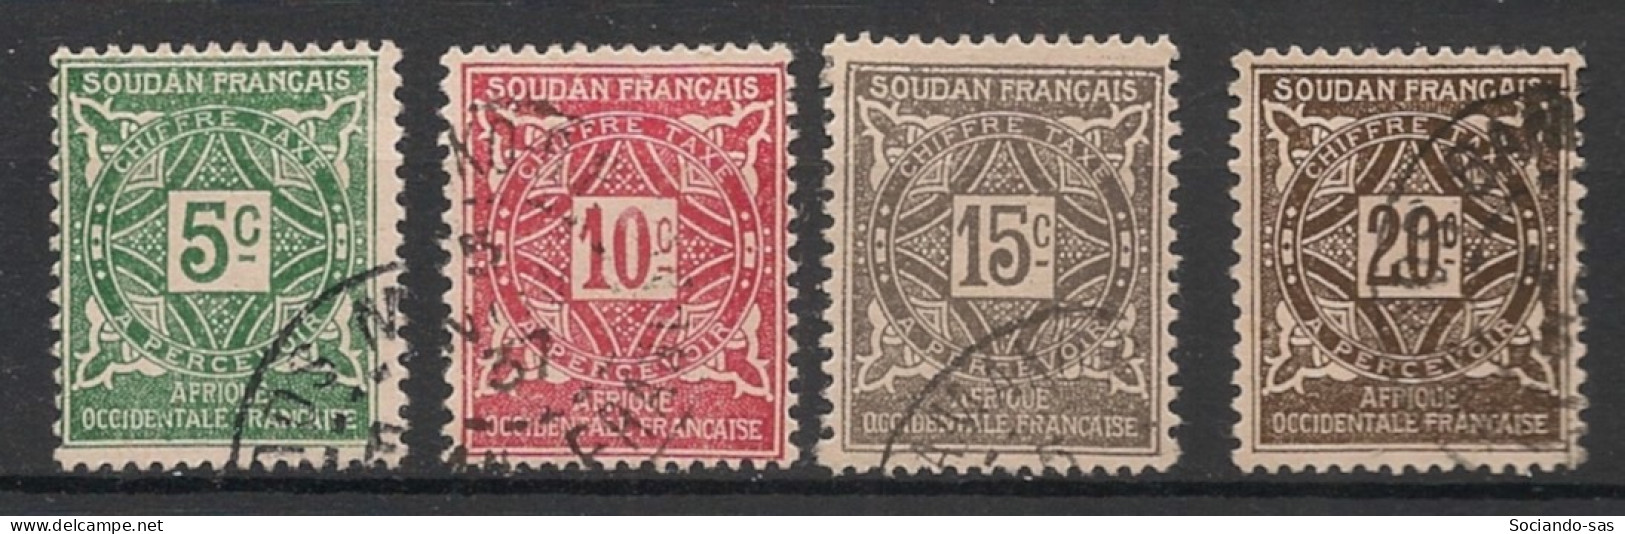 SOUDAN - 1931 - Taxe TT N°YT. 11 à 14 - 4 Valeurs - Oblitéré / Used - Used Stamps